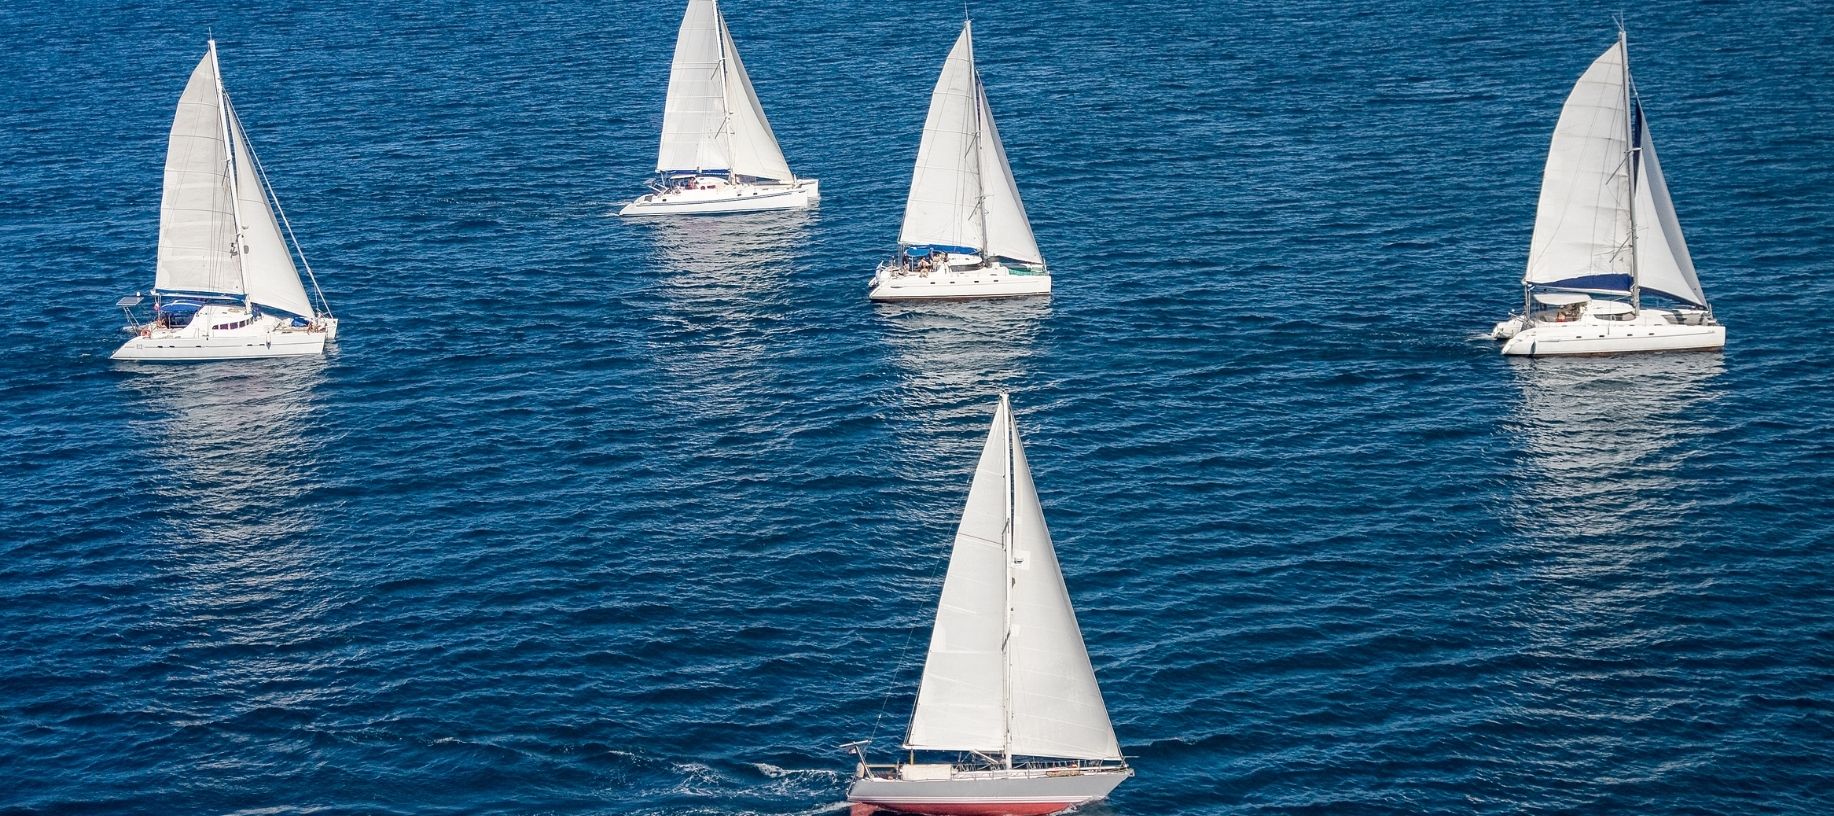 Sailboats racing in a regatta